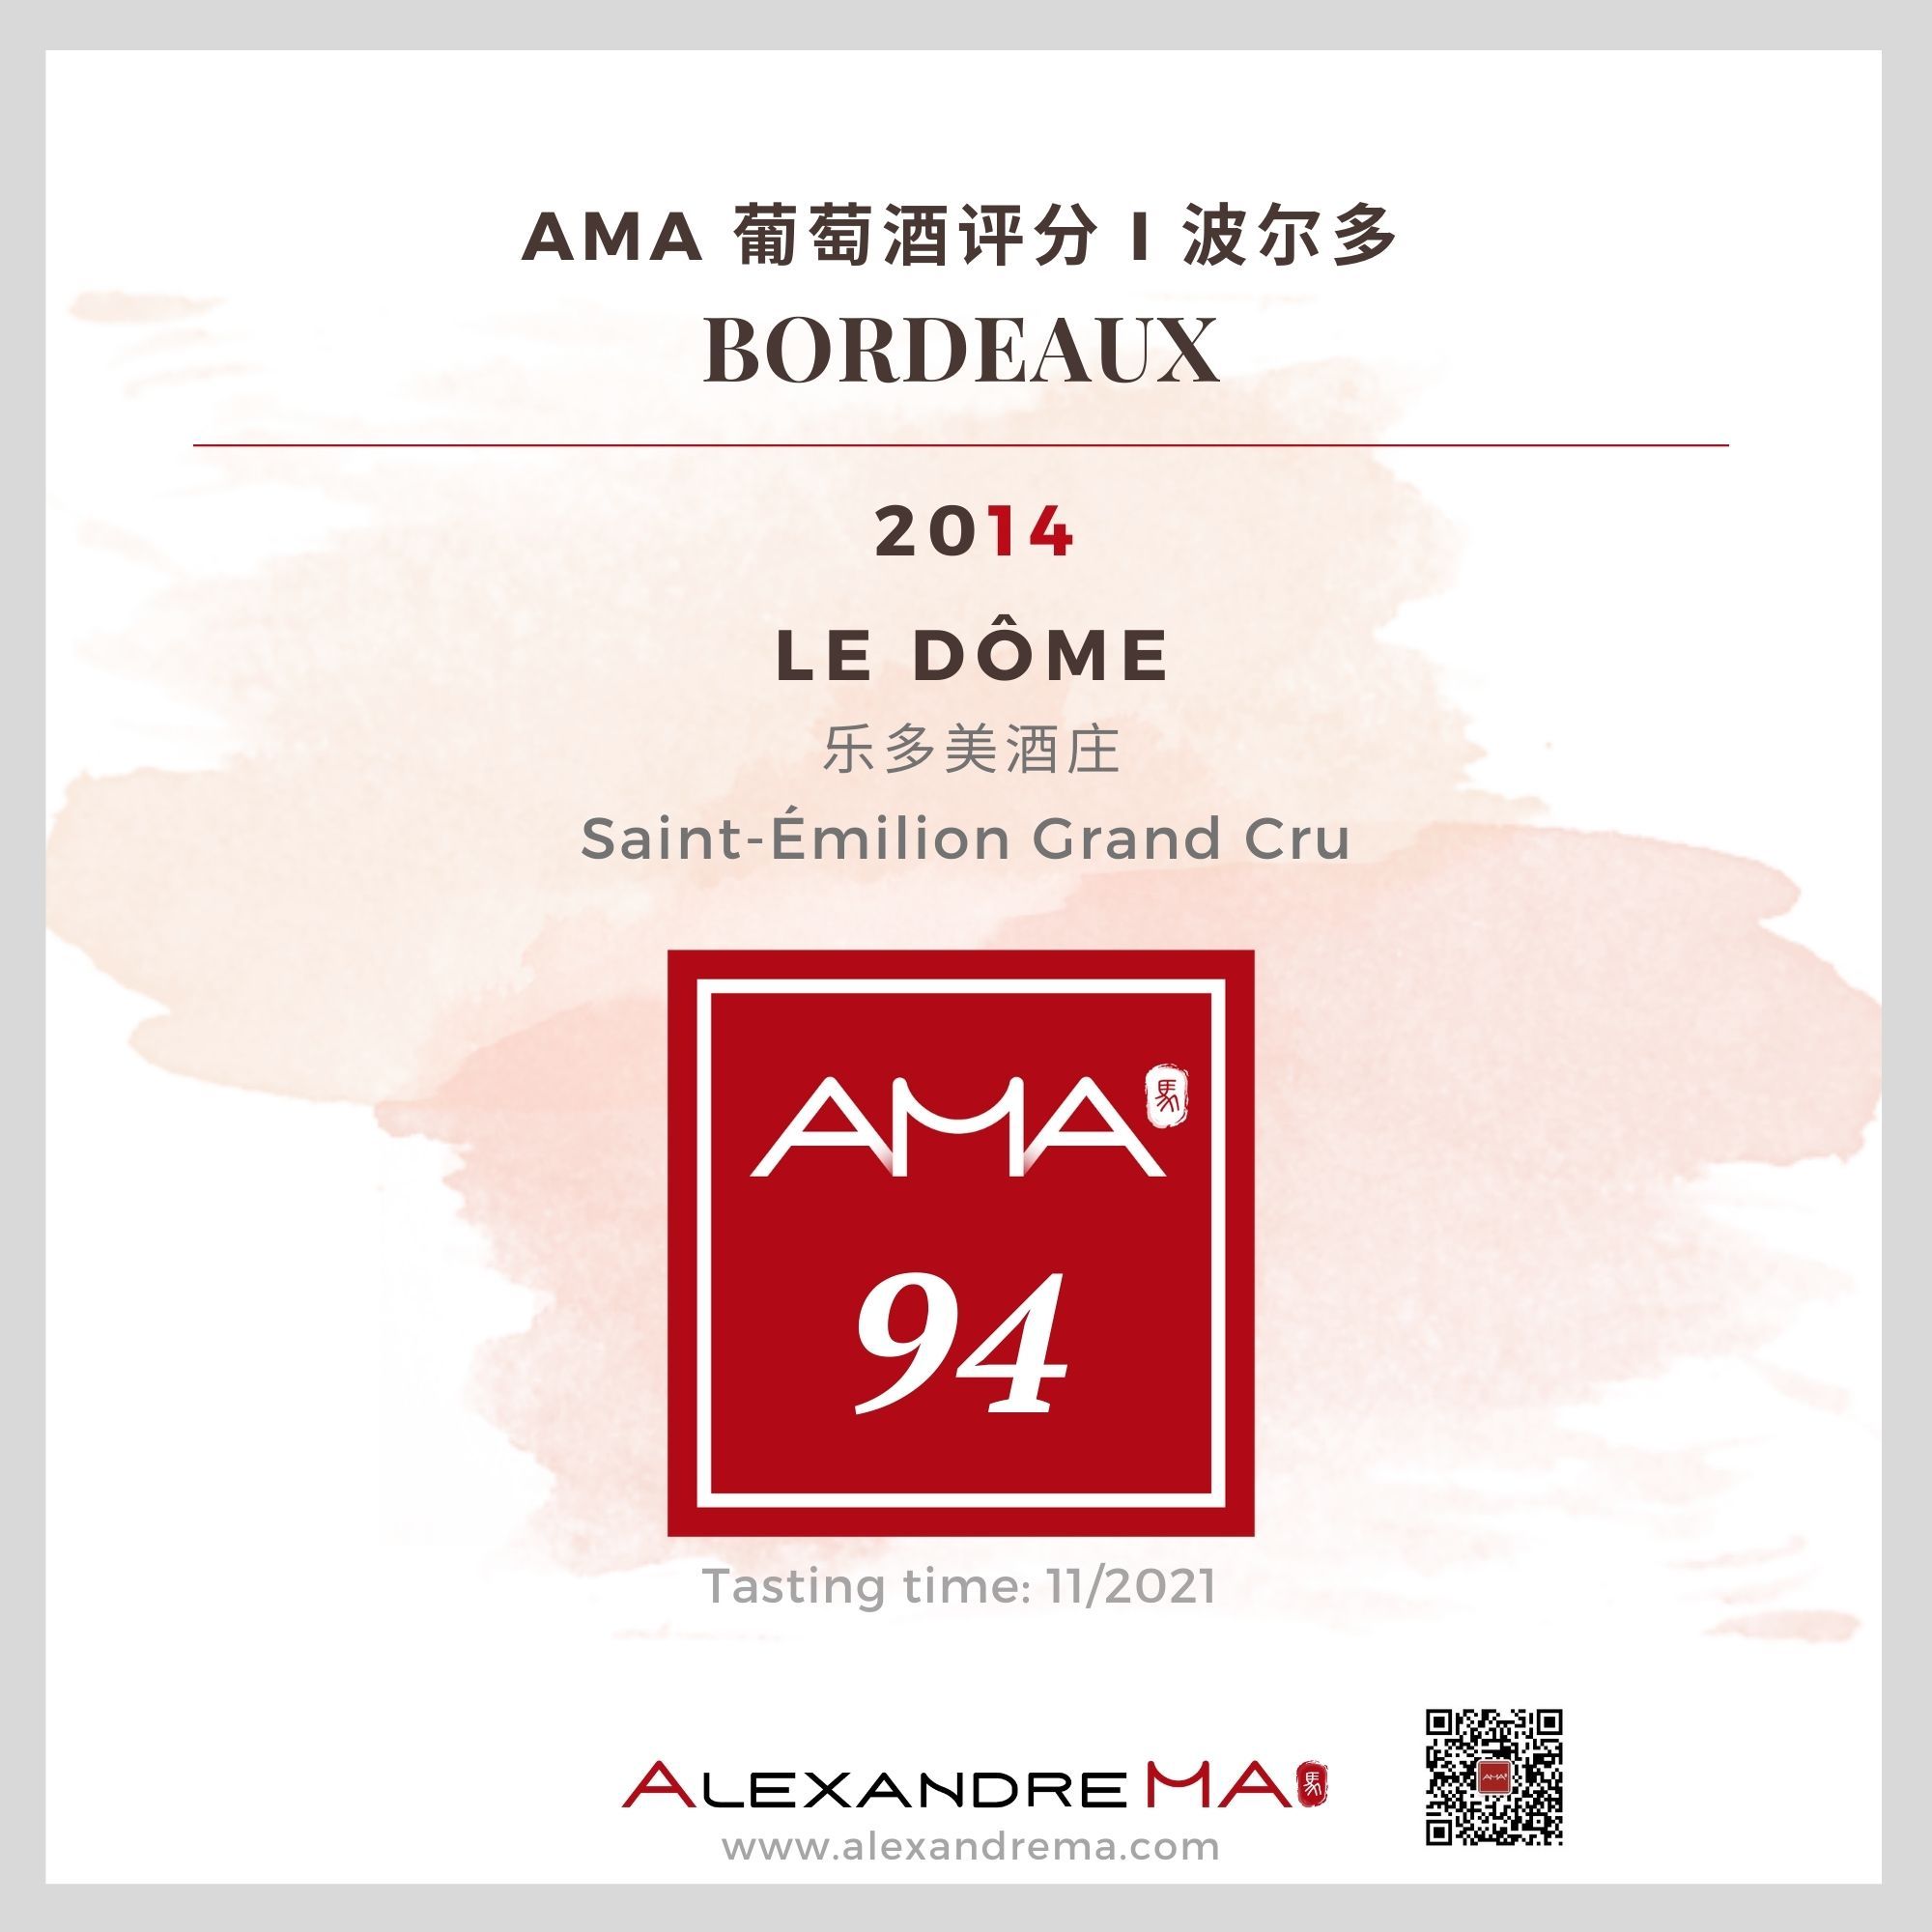 Le Dôme 2014 乐多美酒庄 - Alexandre Ma